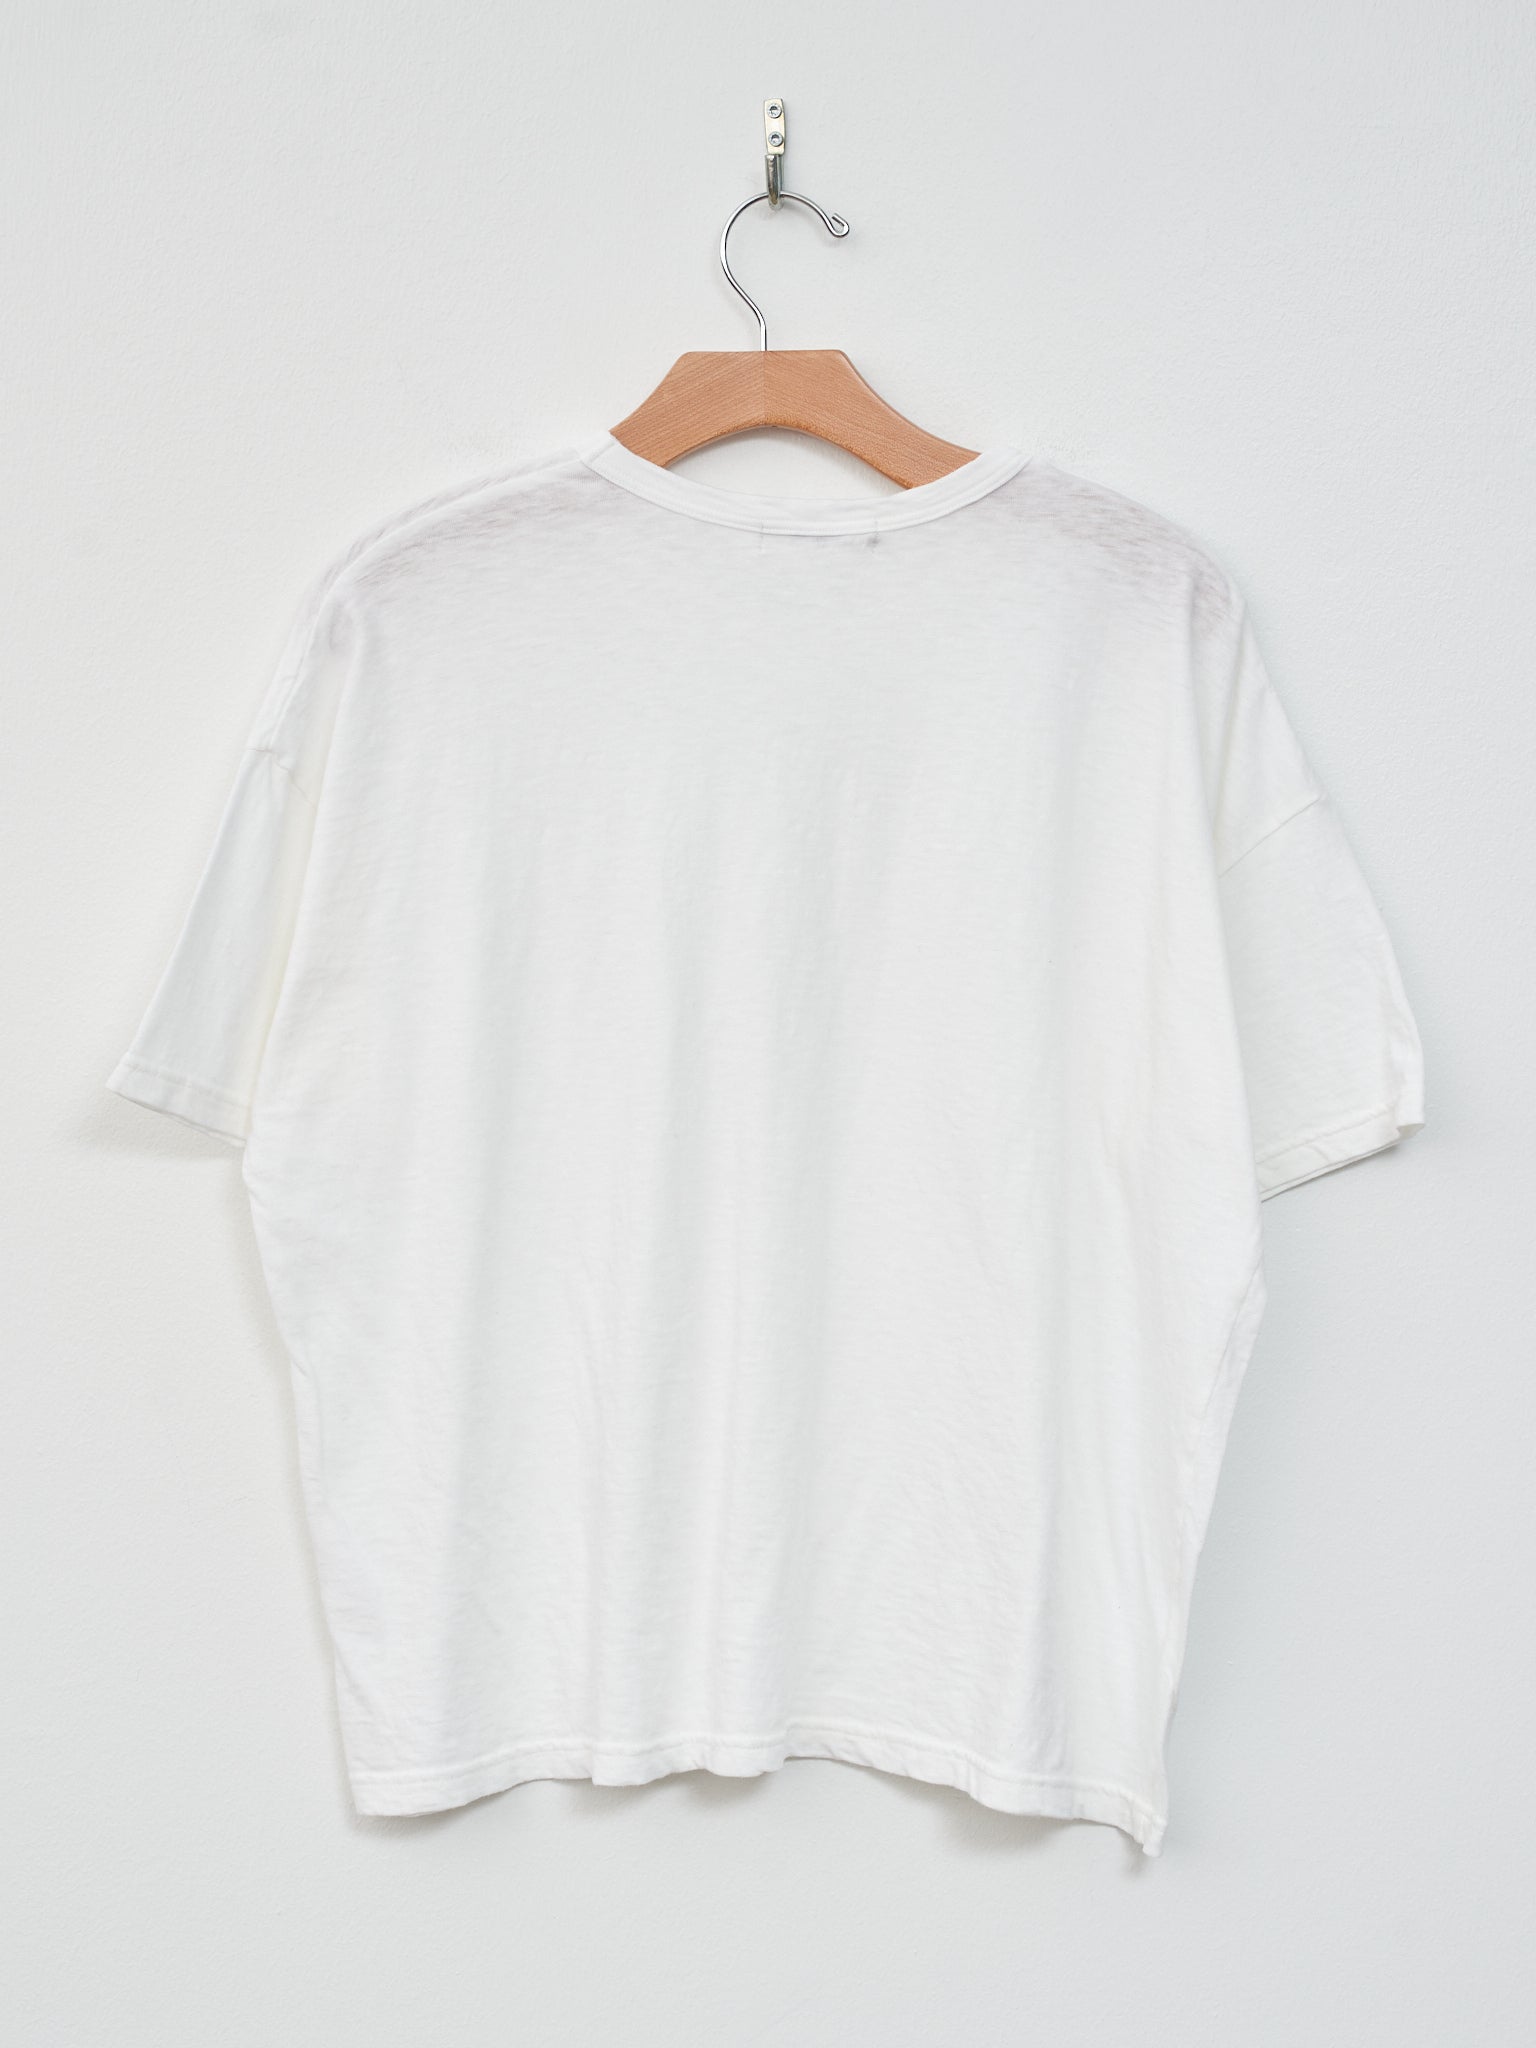 Namu Shop - Ichi T-Shirt - White